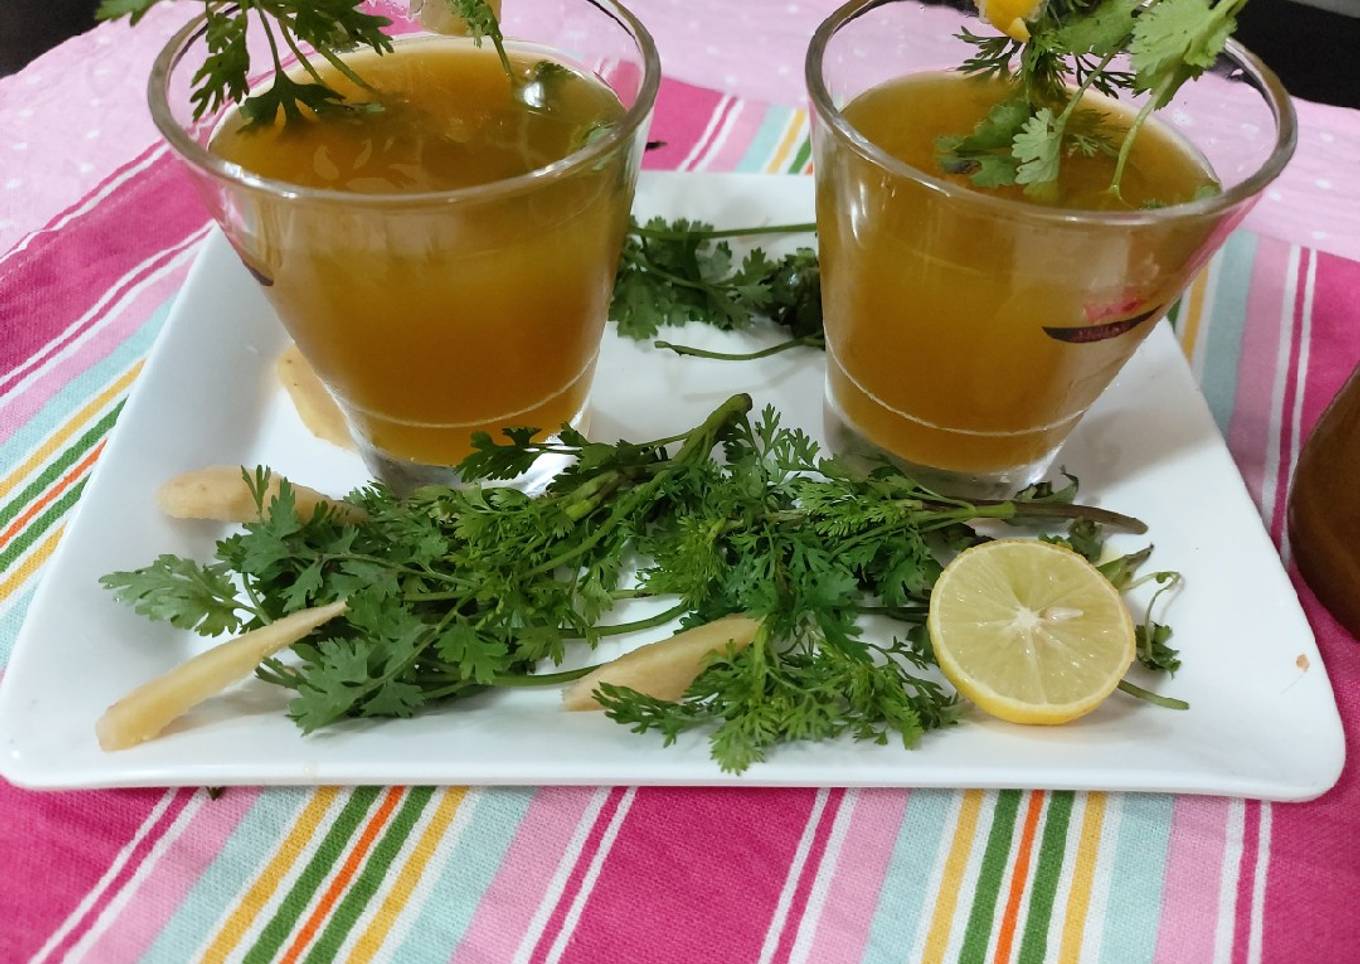 Lemon and tarmaric amla ginger tea/ this tea naice for emmunity